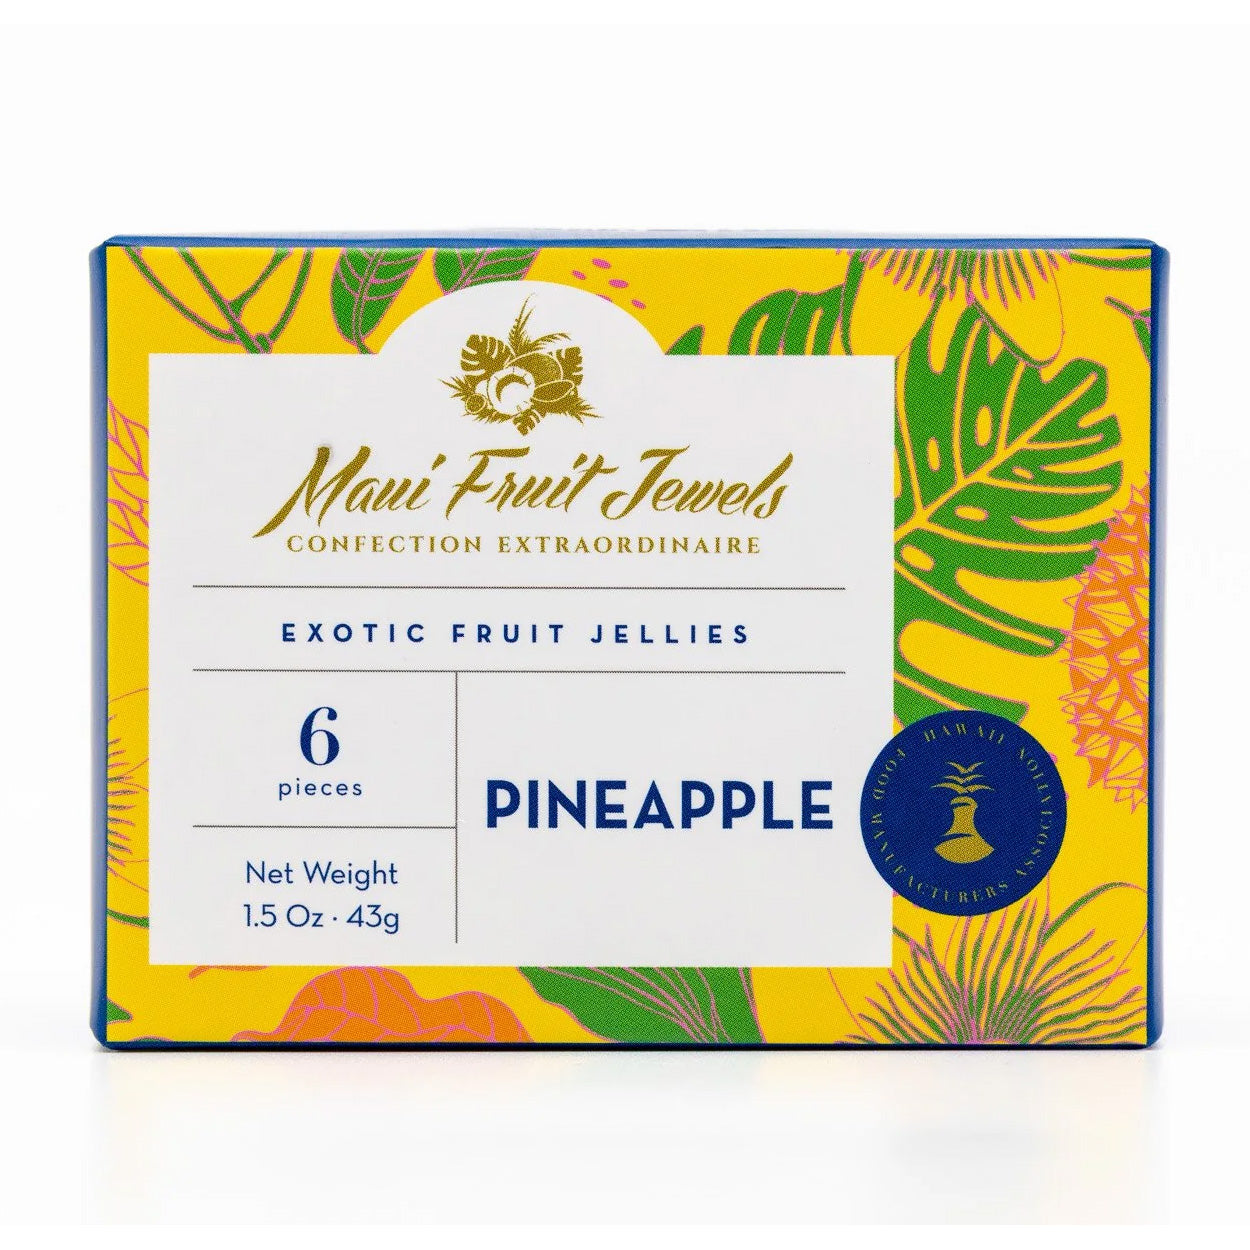 Pop-Up Mākeke - Maui Fruit Jewels - Exotic Fruit Jellies - Pineapple - Front View